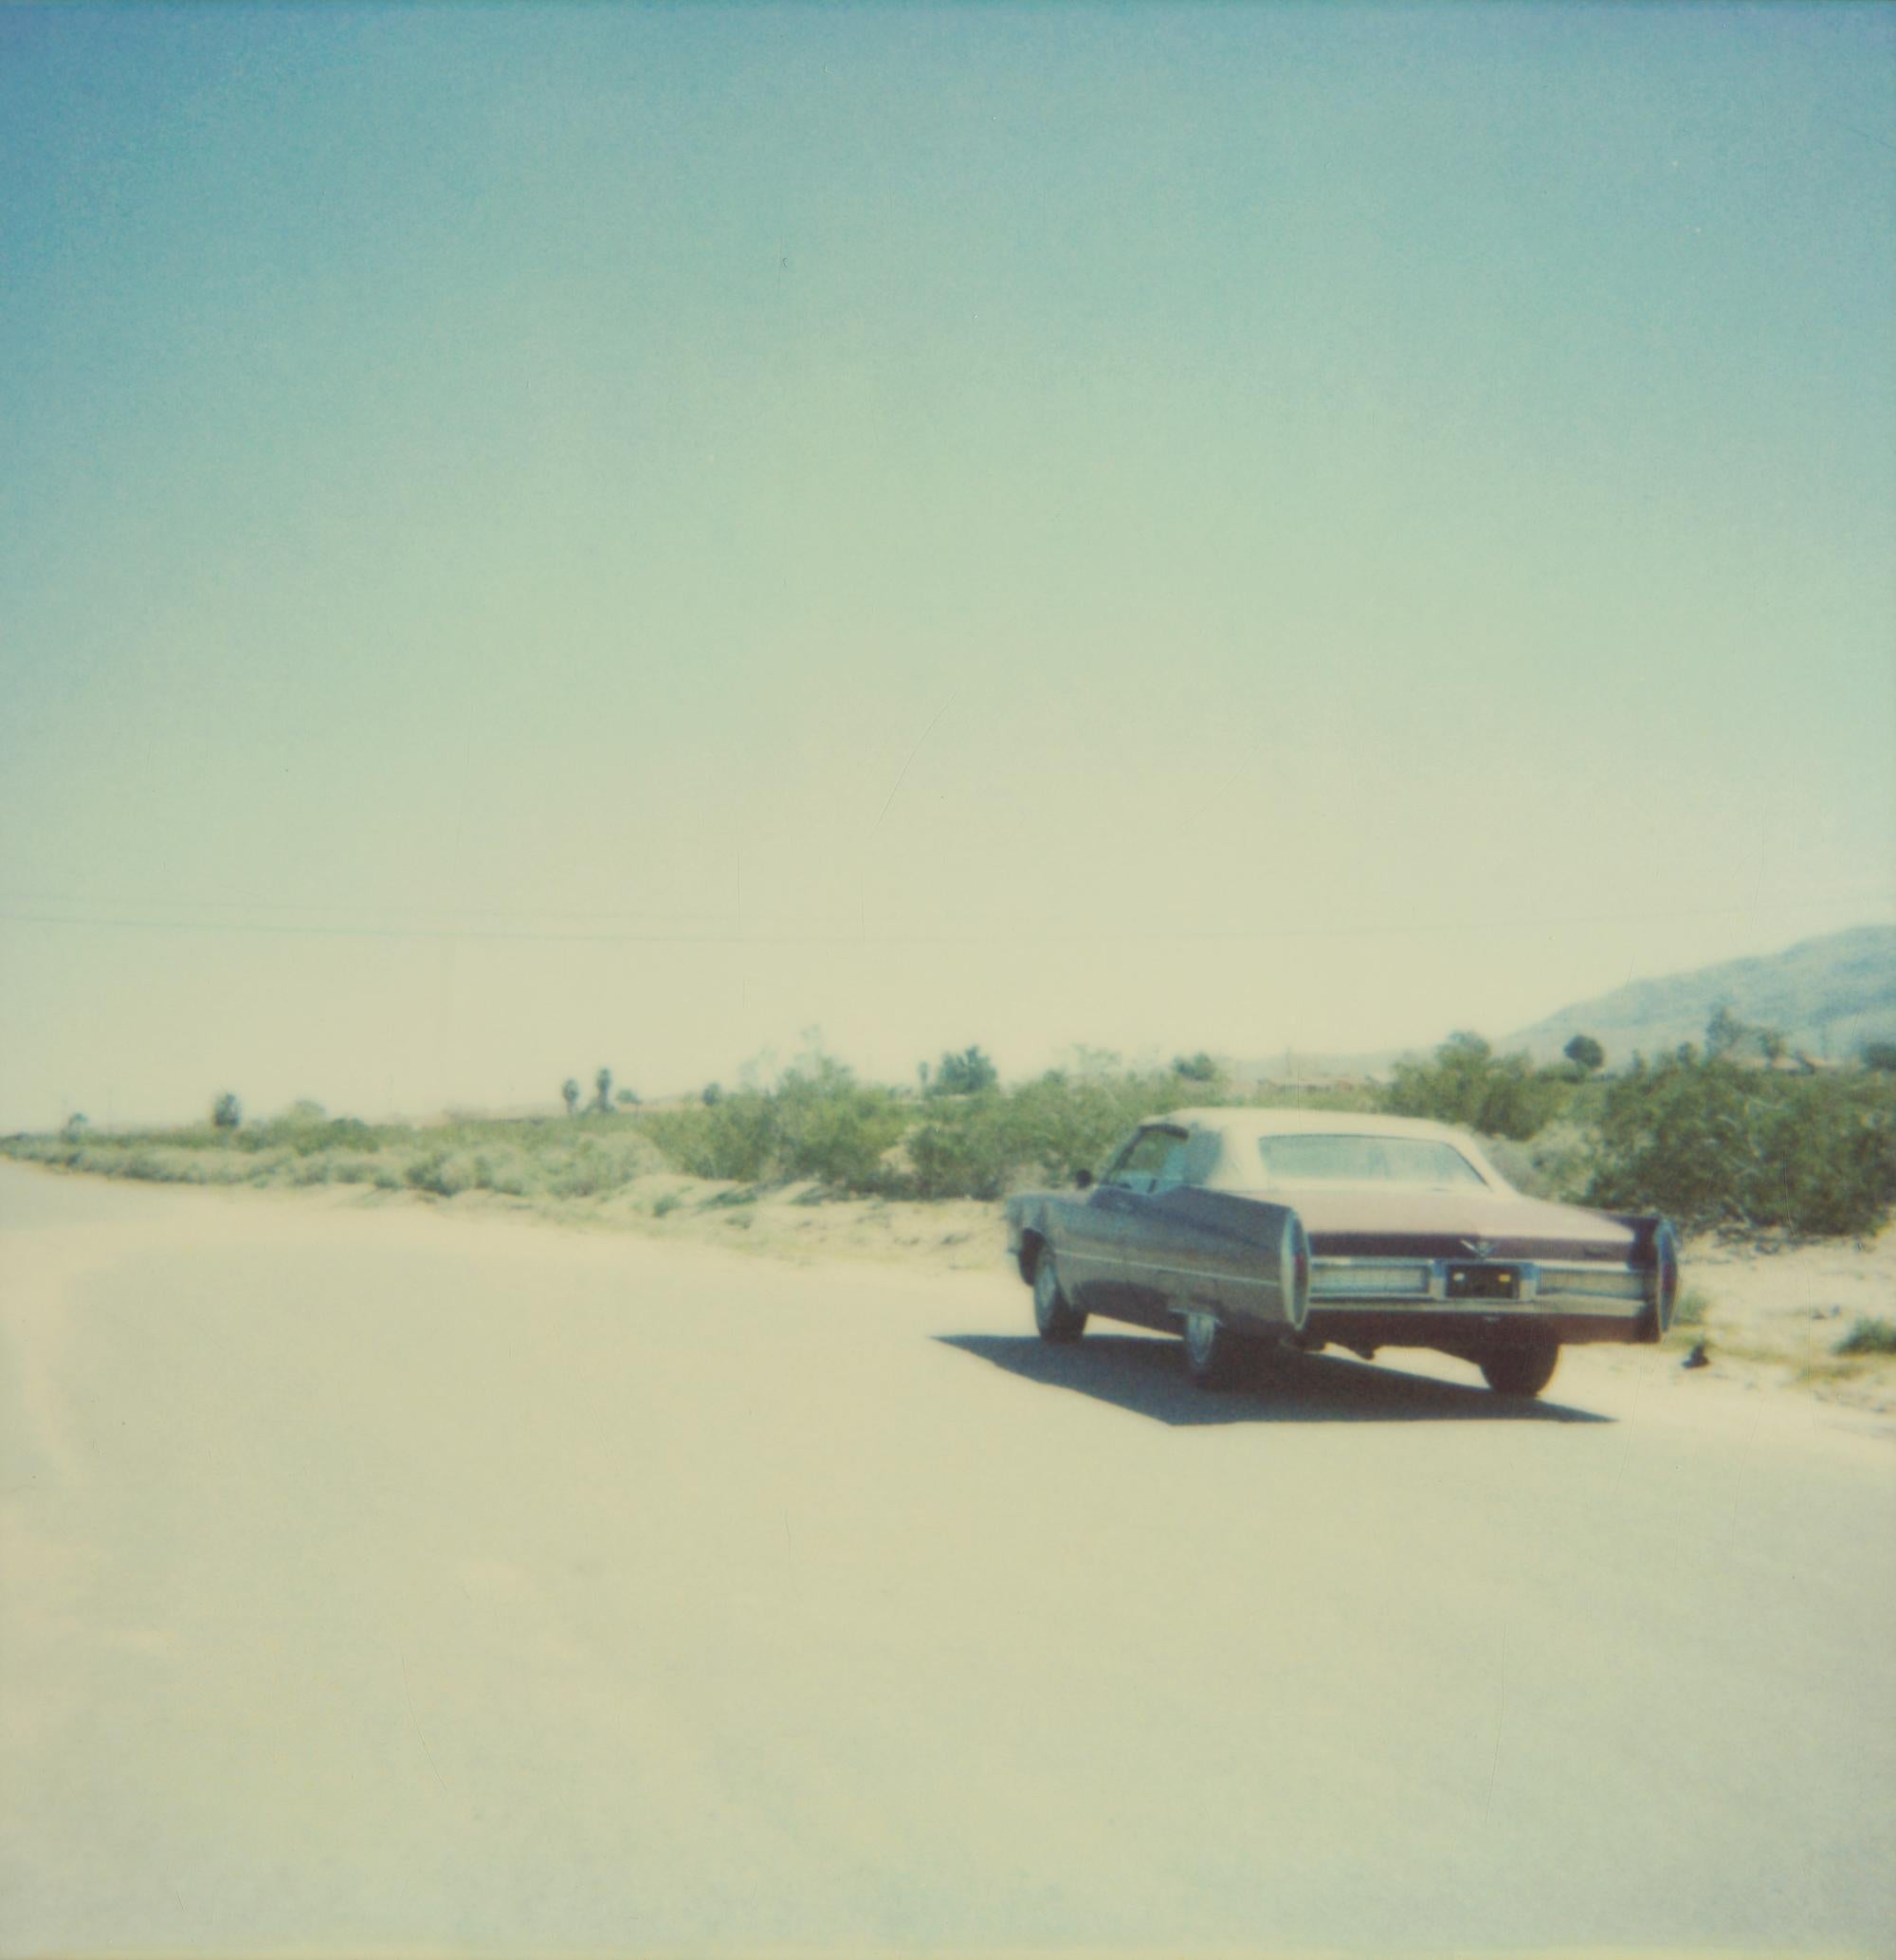 Landscape Photograph Stefanie Schneider - The Getaway (Till Death do us Part) - Contemporain, Polaroid